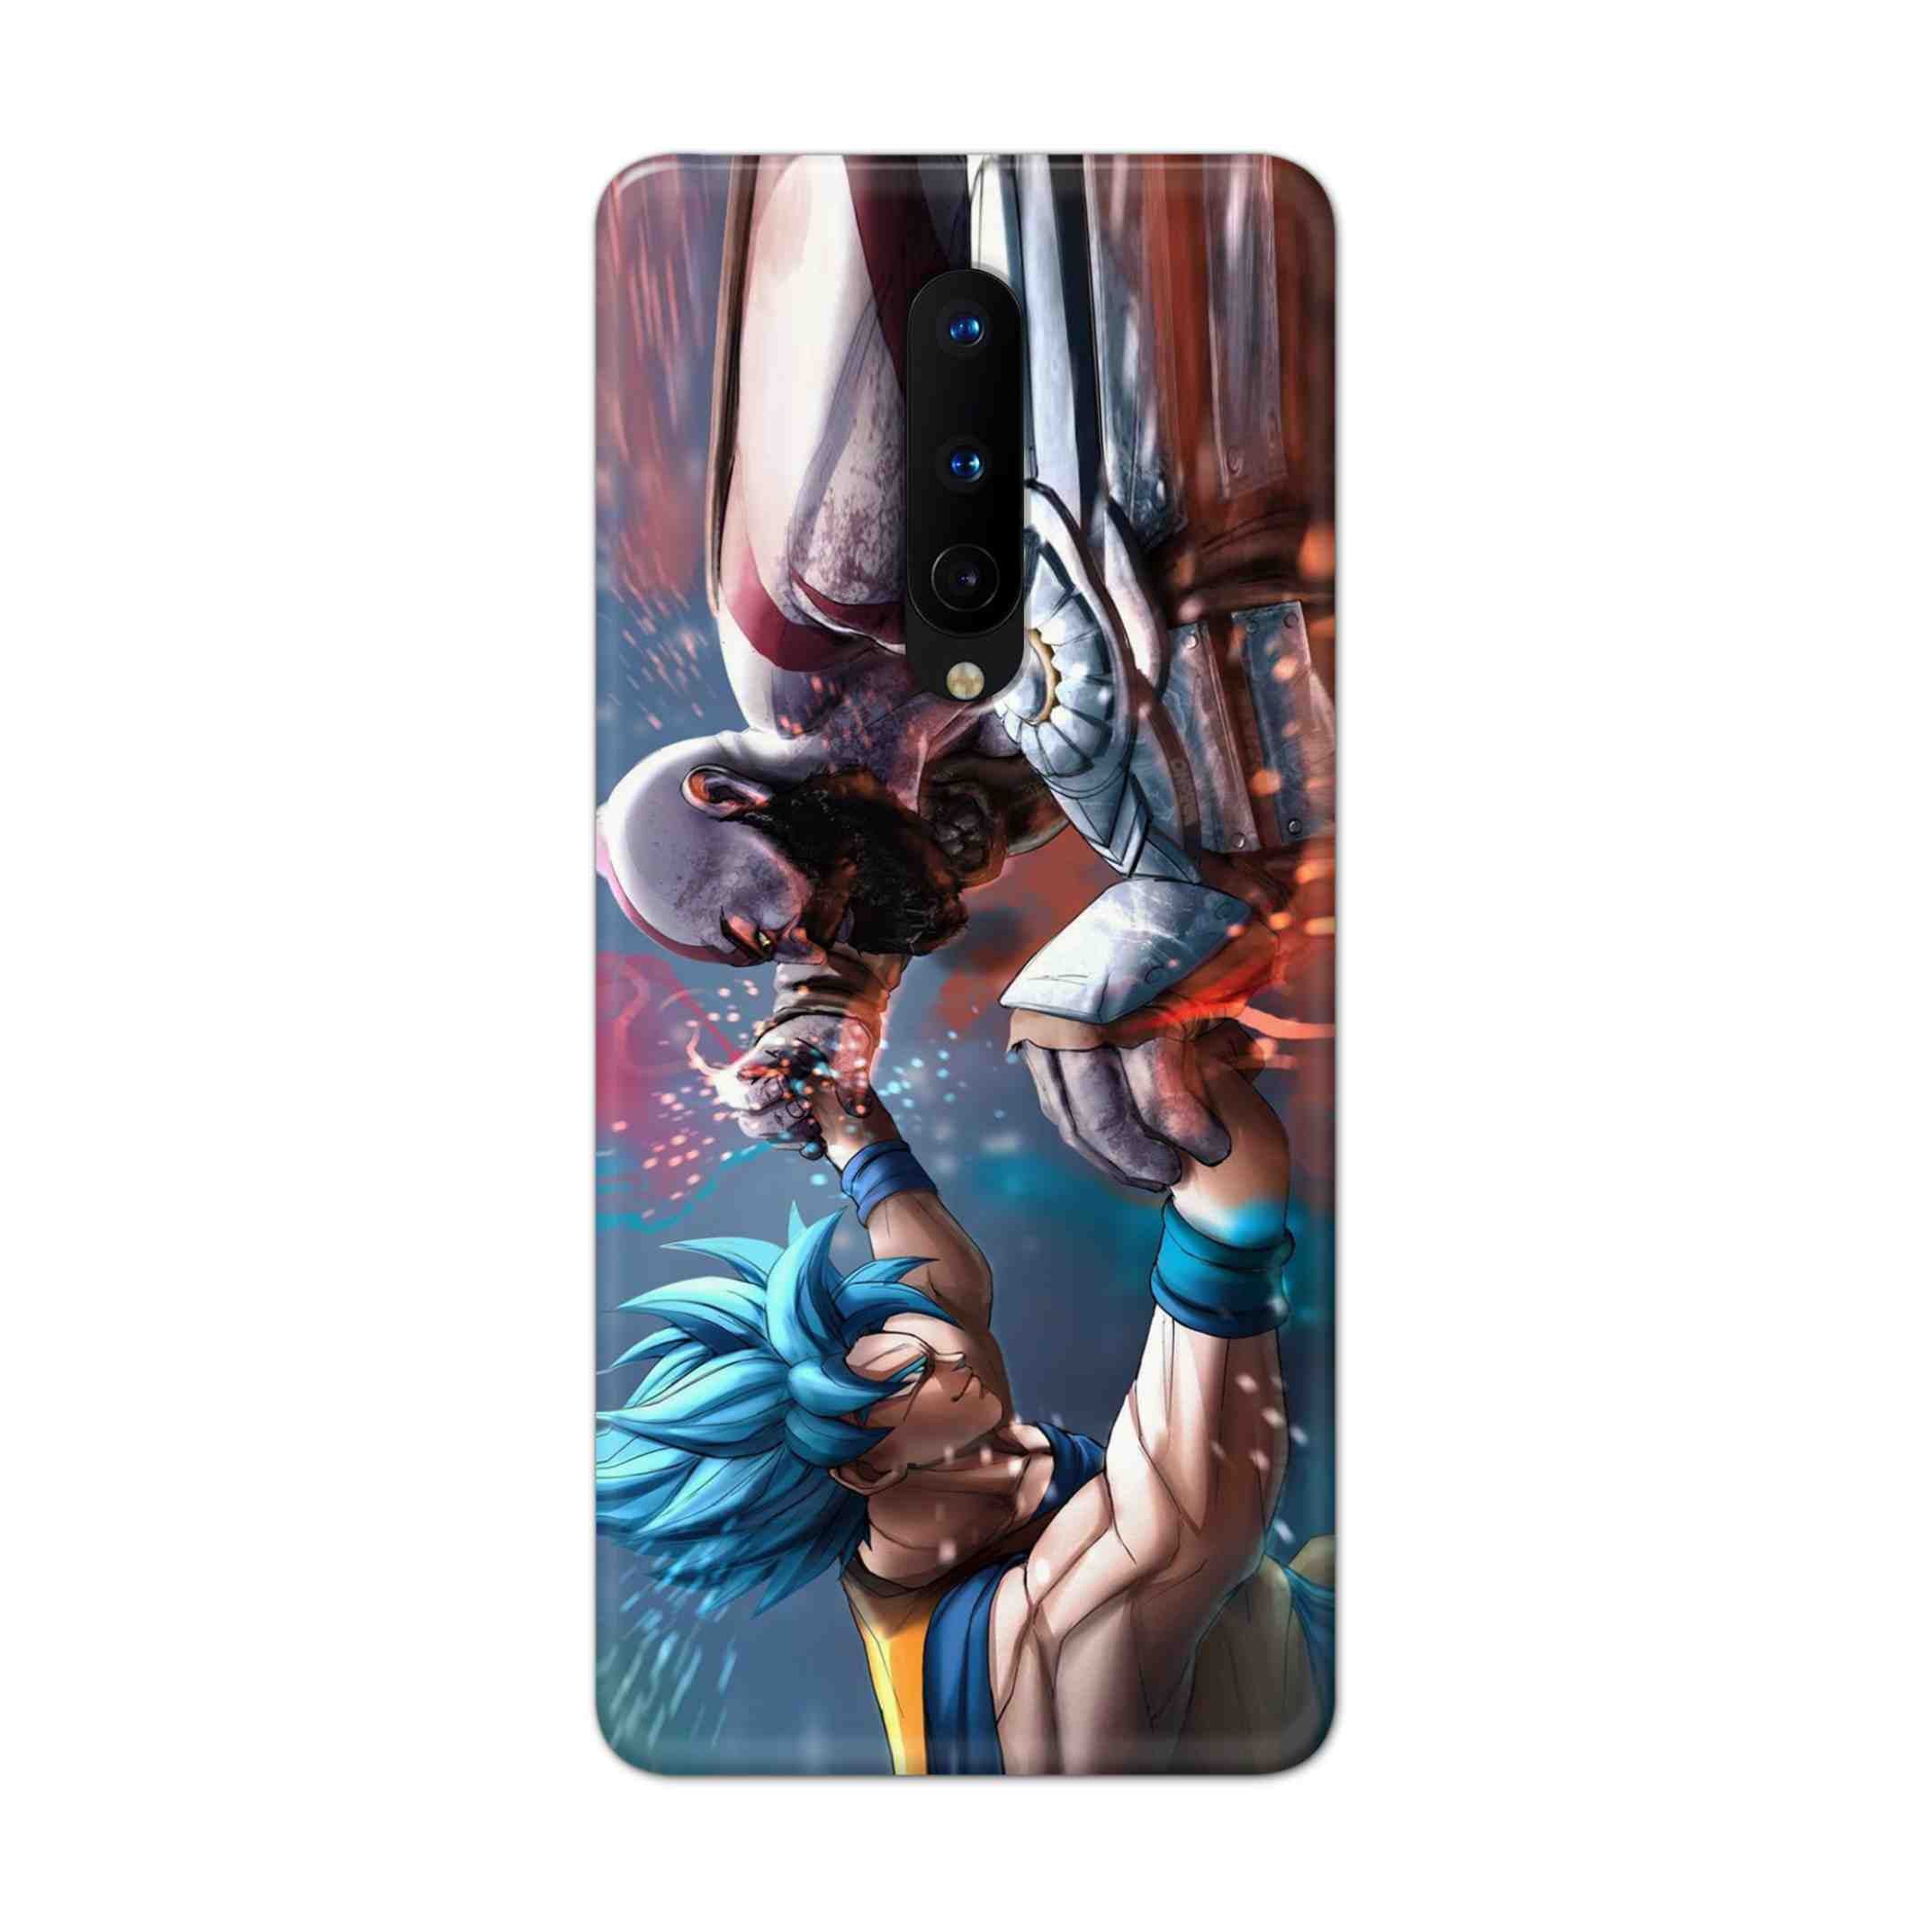 Buy Goku Vs Kratos Hard Back Mobile Phone Case Cover For OnePlus 8 Online